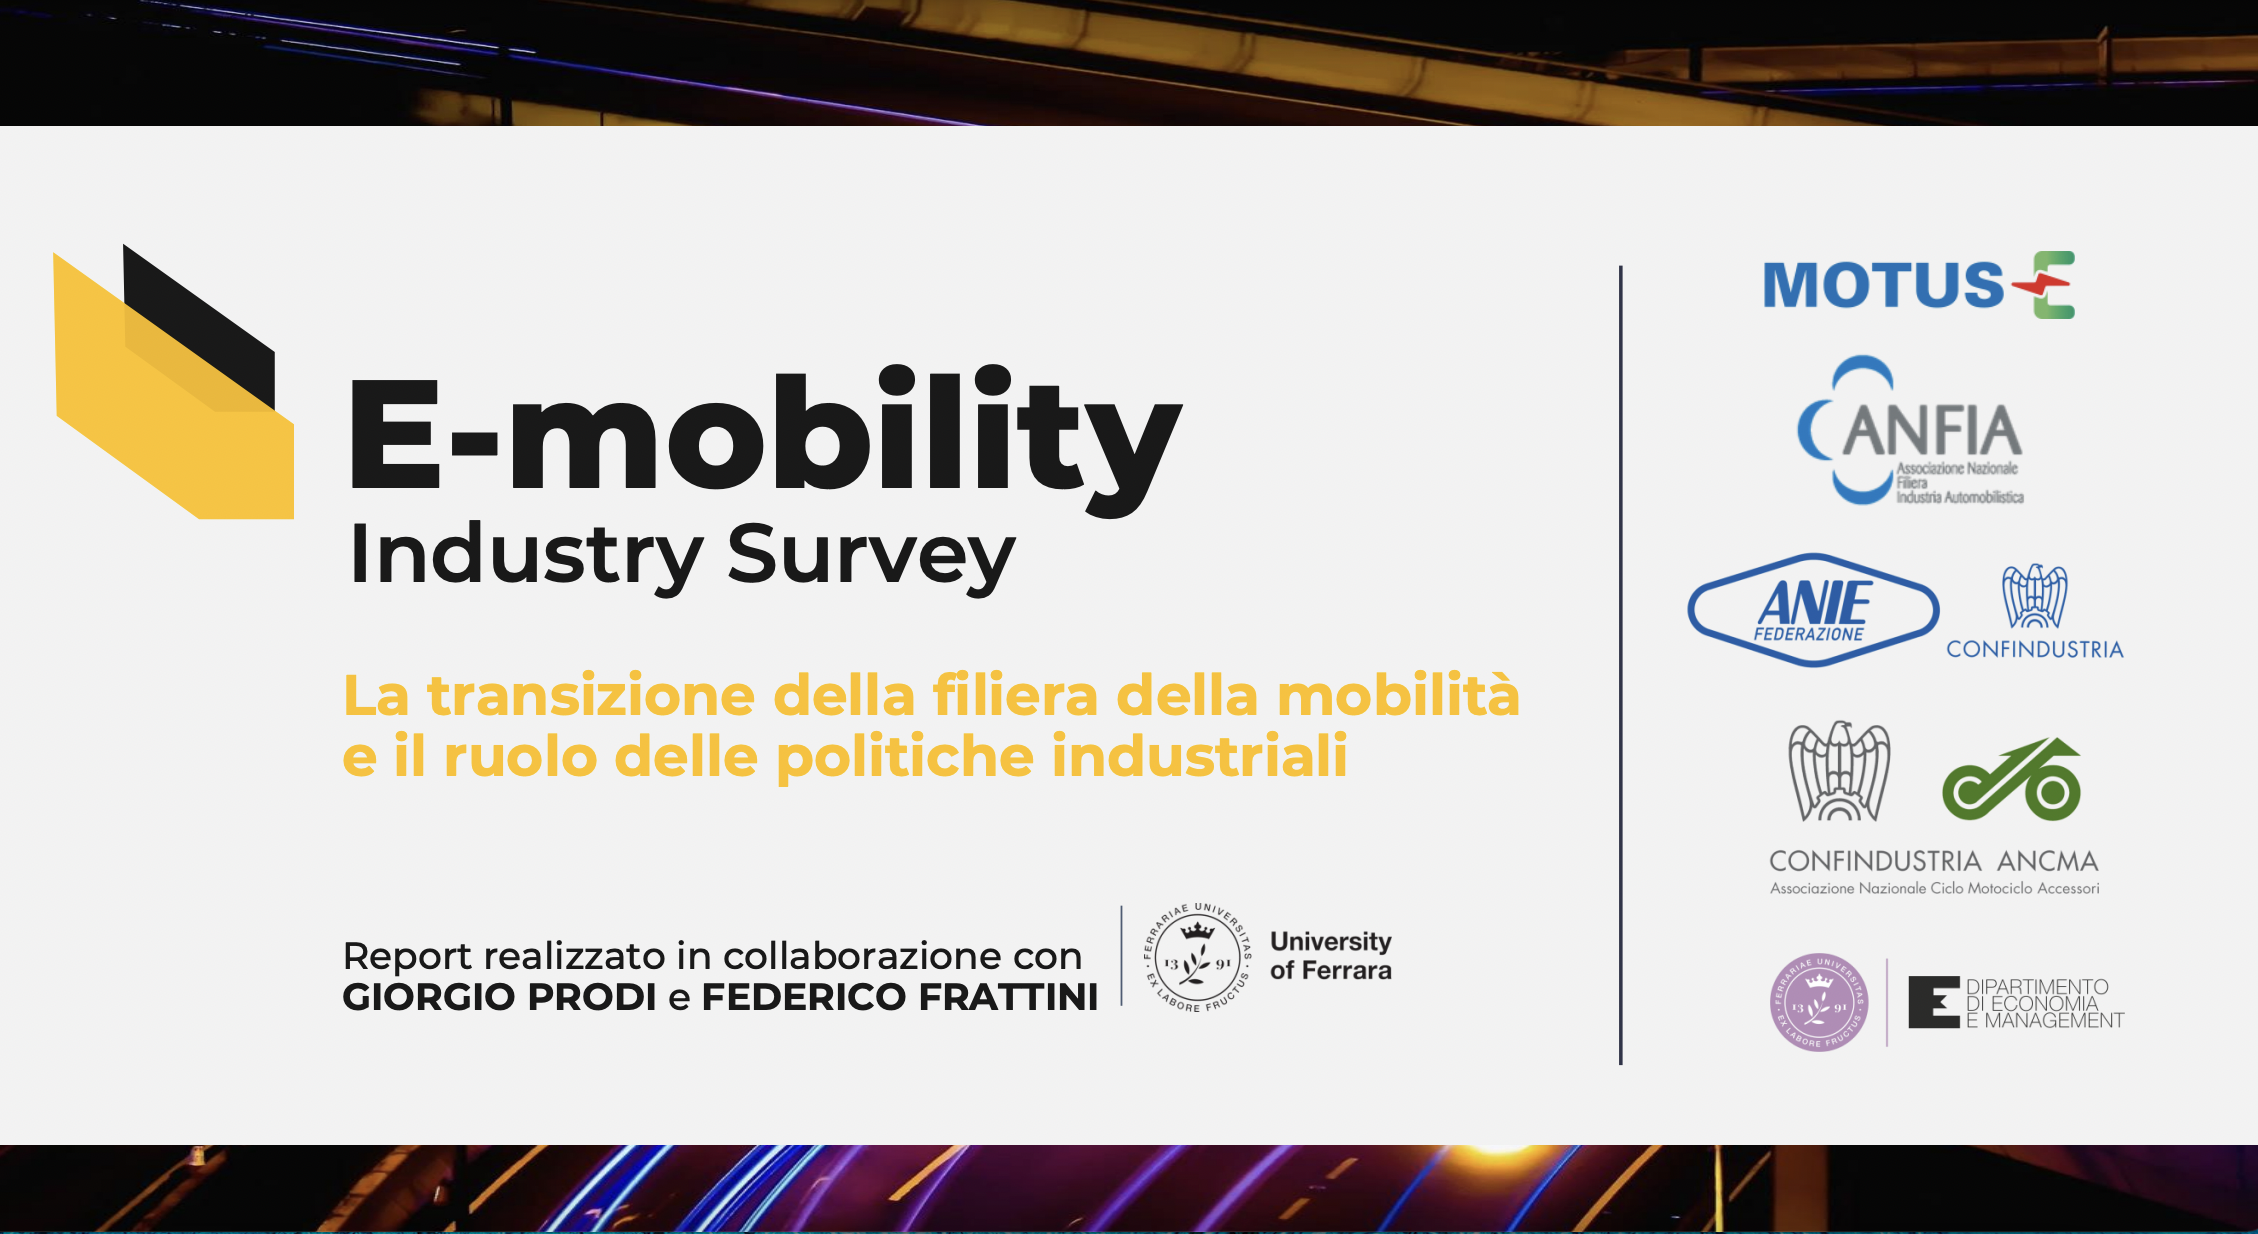 E-mobility Industry Survey